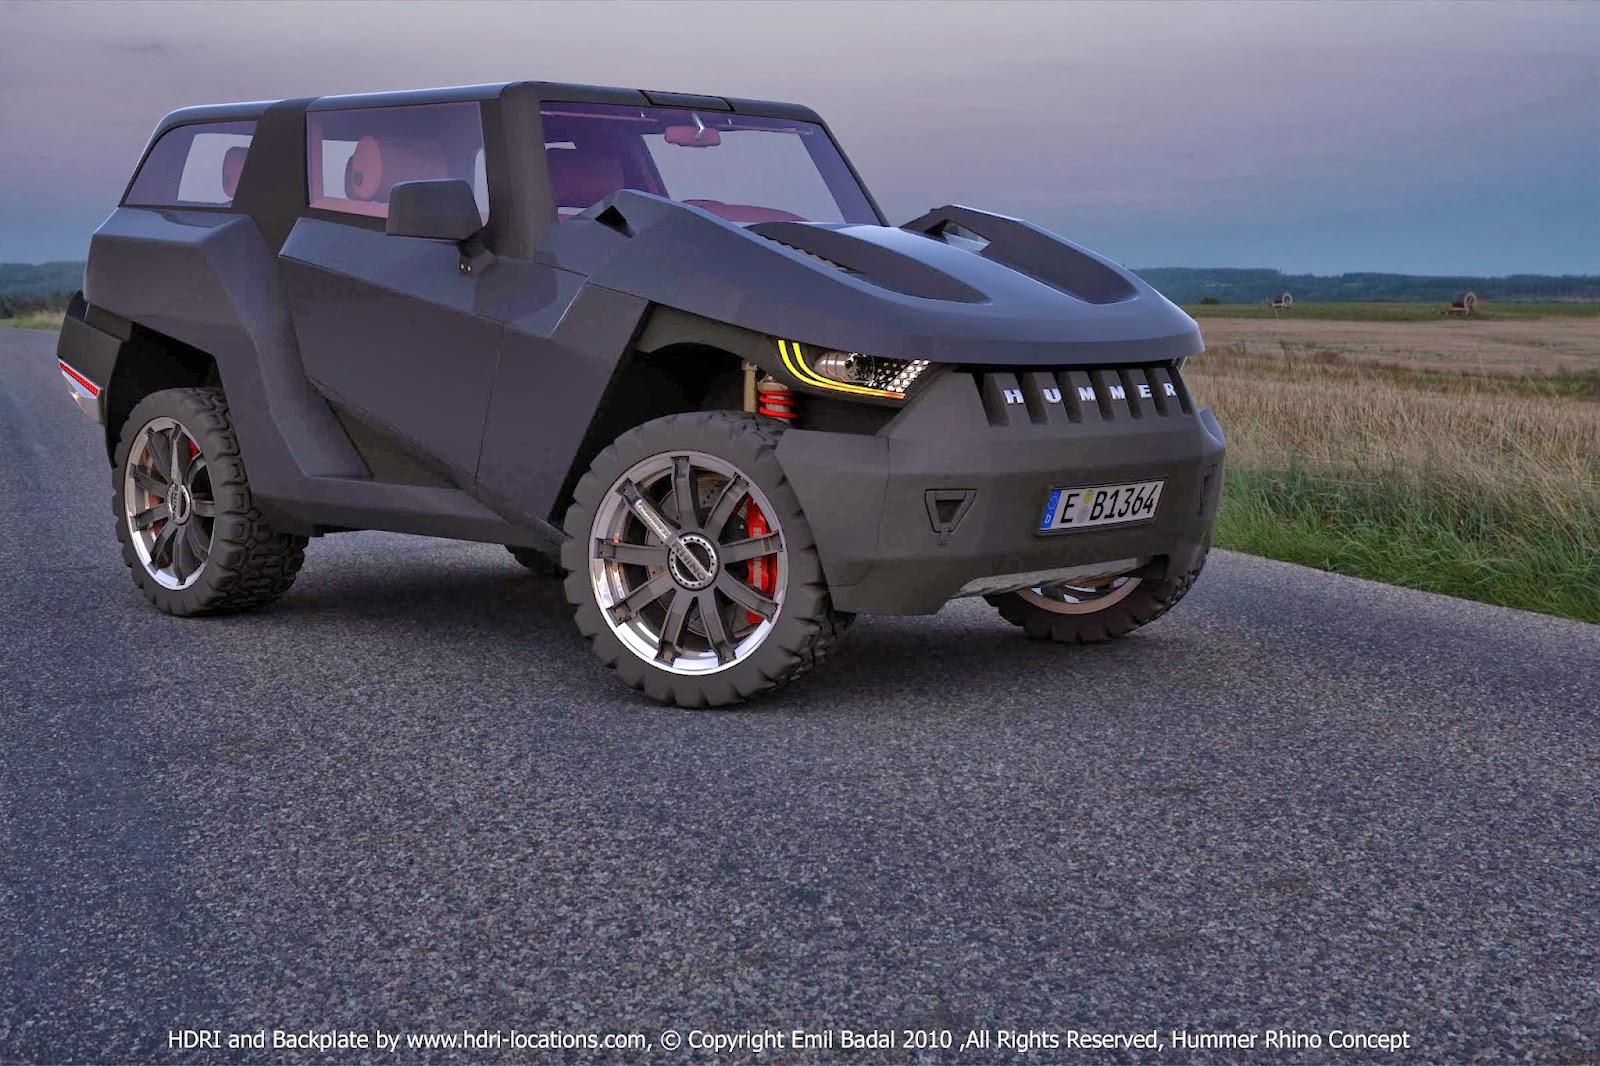 Car Shows 2014: Hummer Rhino Concept1600 x 1066